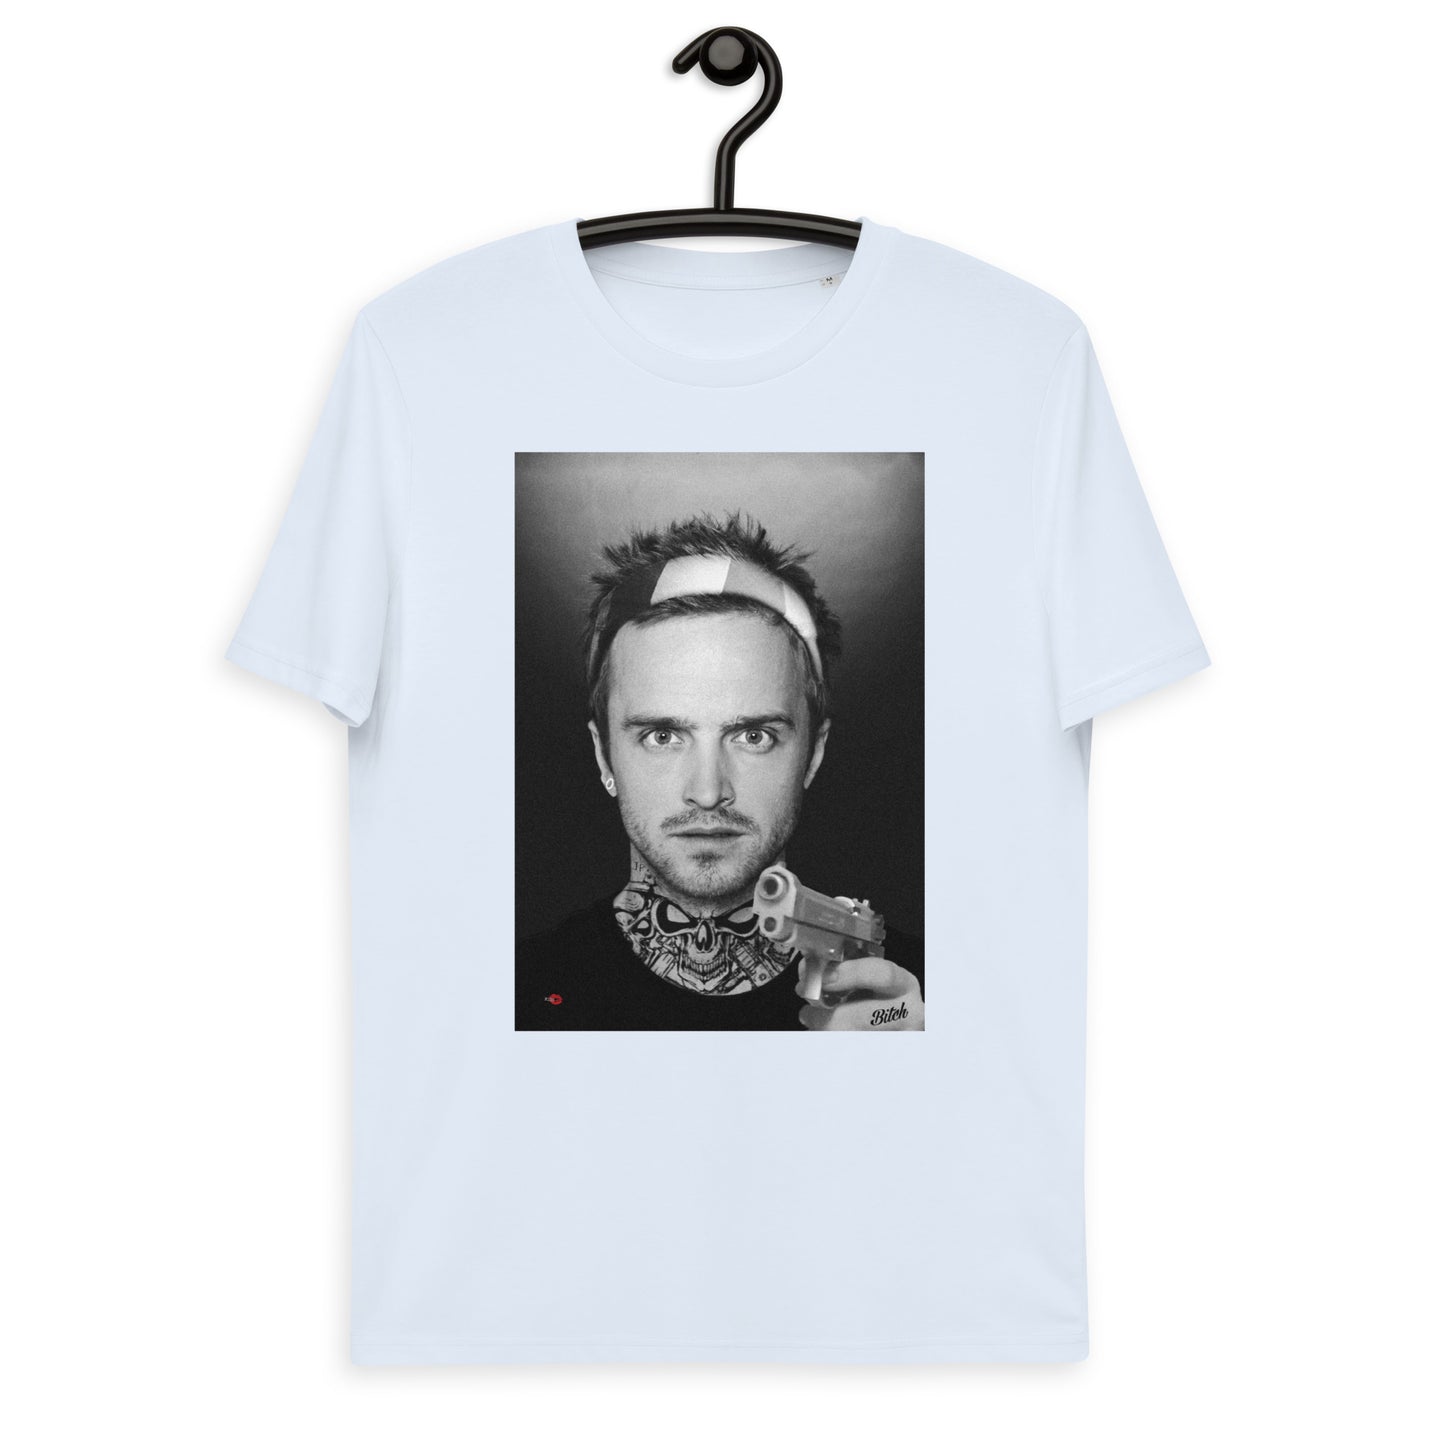 Pinkman KiSS Unisex organic cotton t-shirt - Jesse Breaking Bad show inspired Tattooed